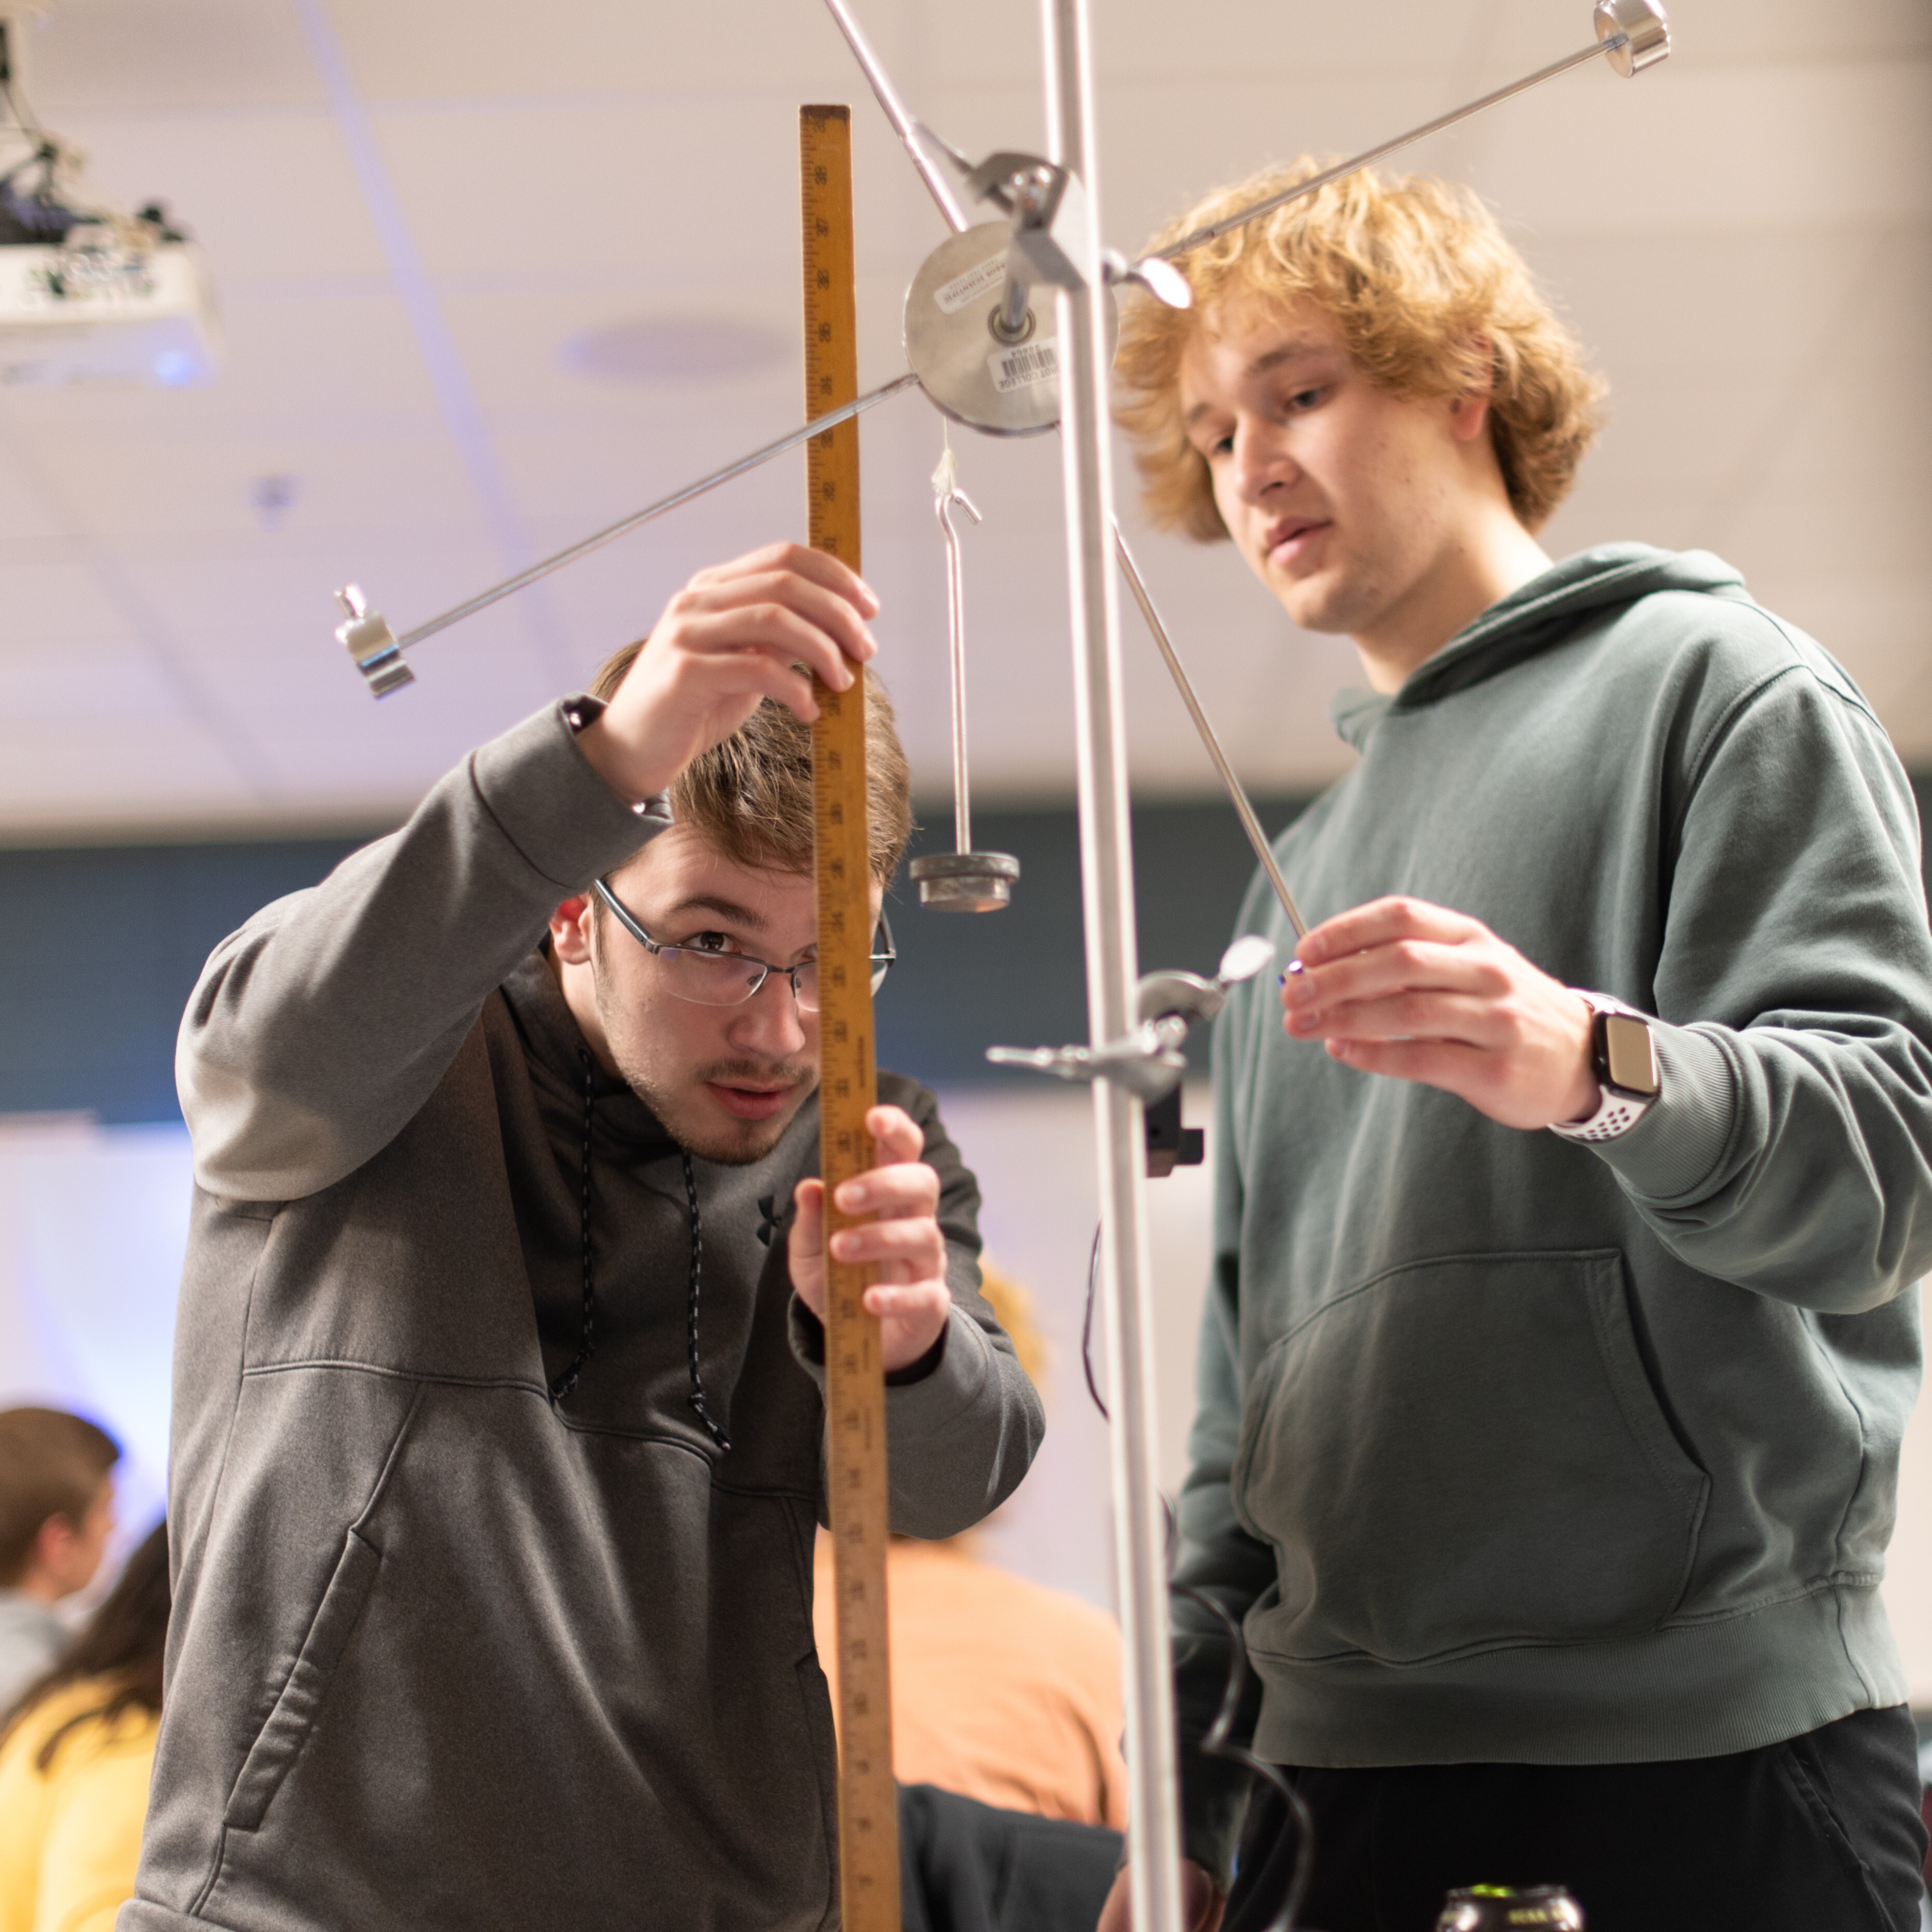 Male students using physics equipment